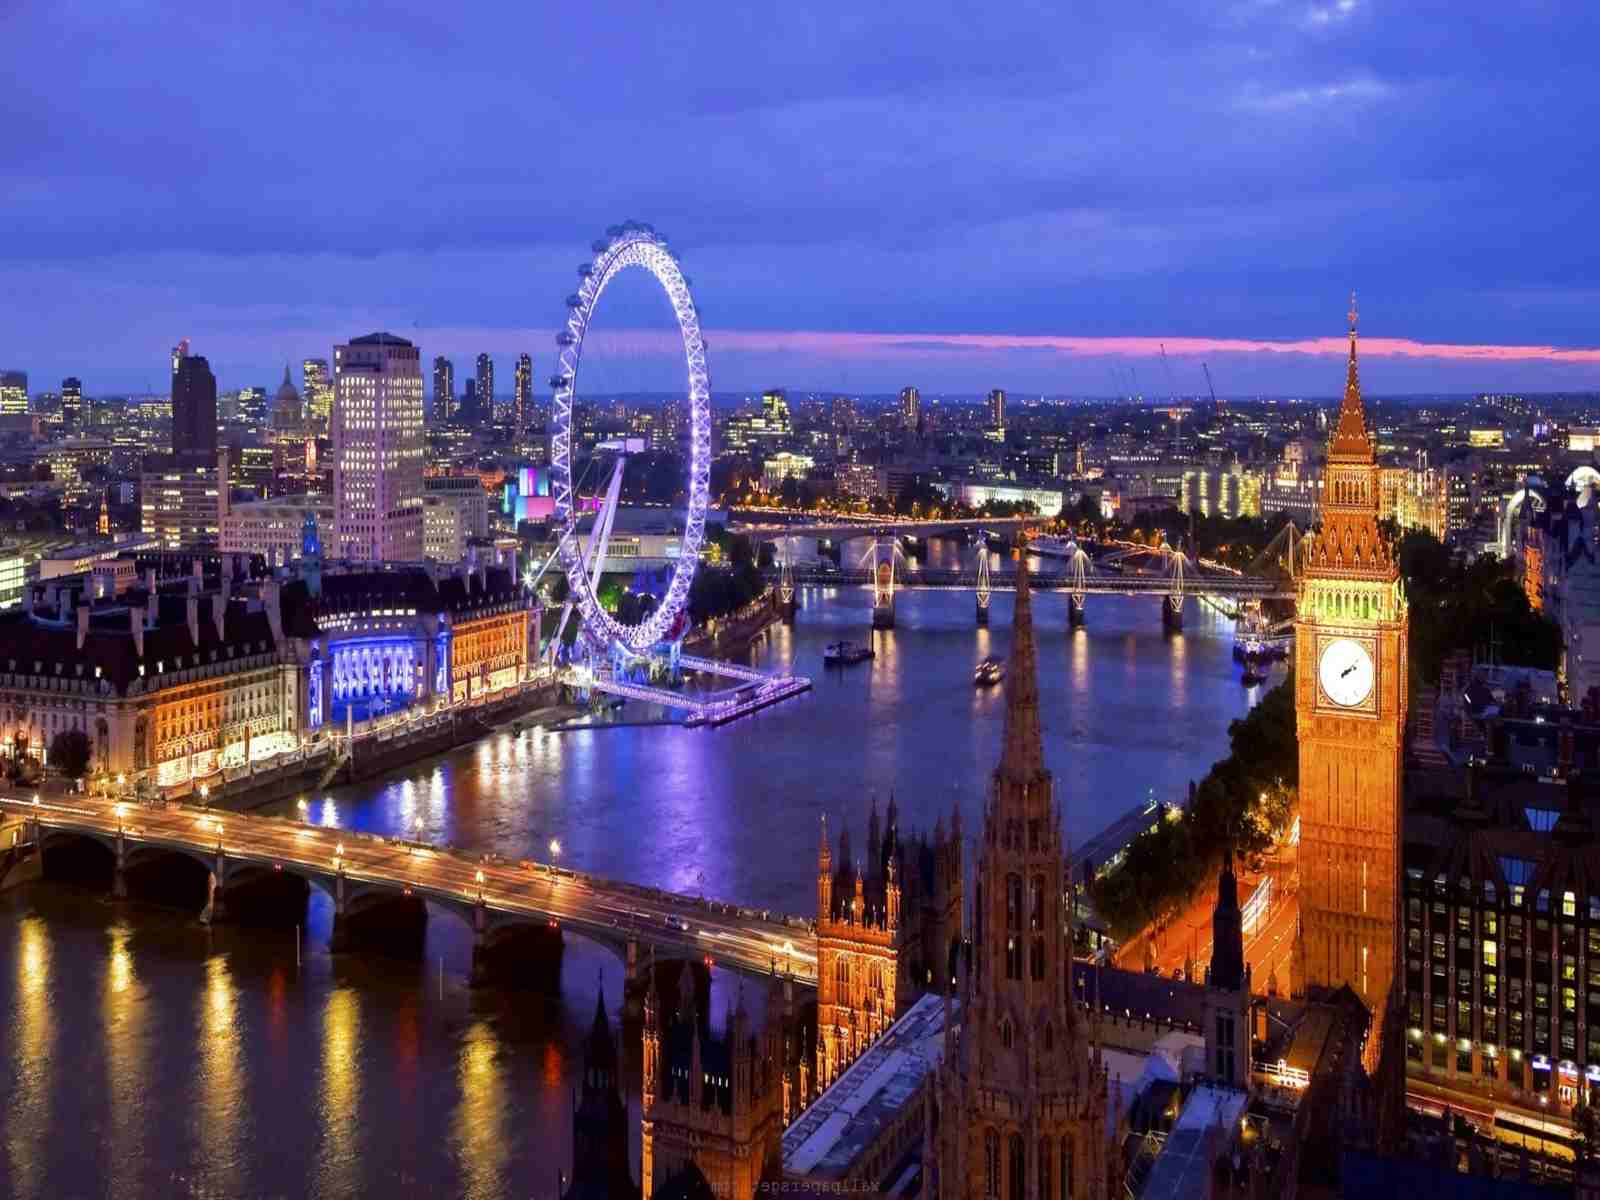 romantic places to visit near london